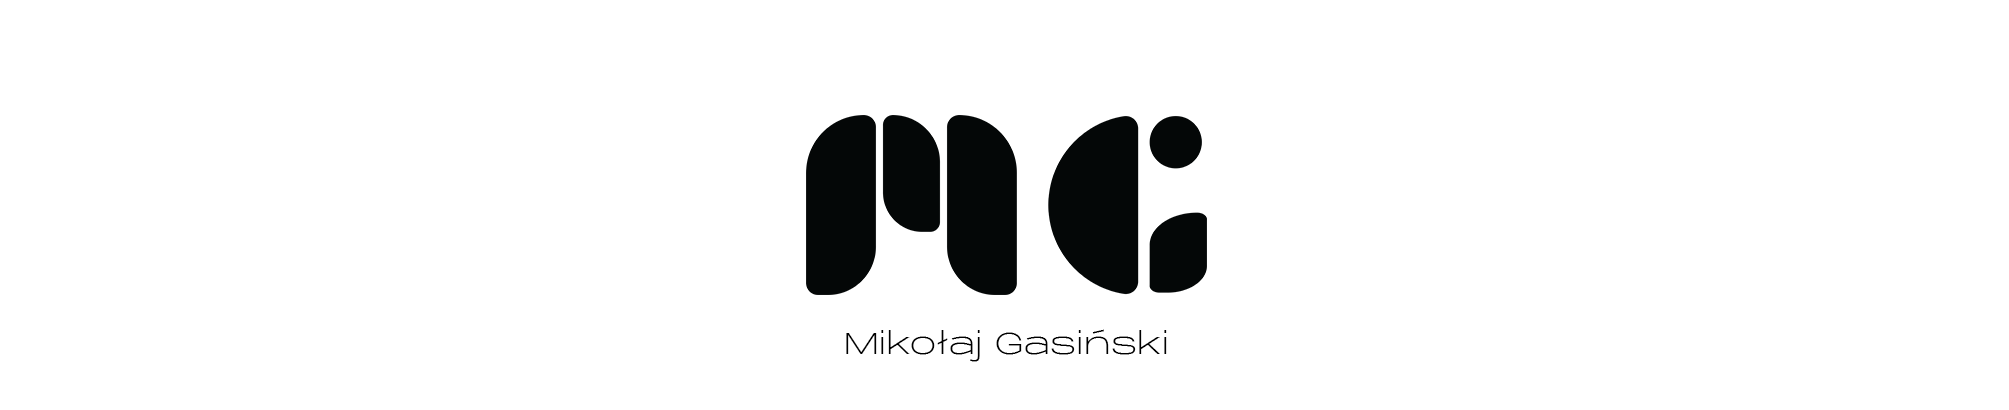 Mikołaj Gasiński's profile banner